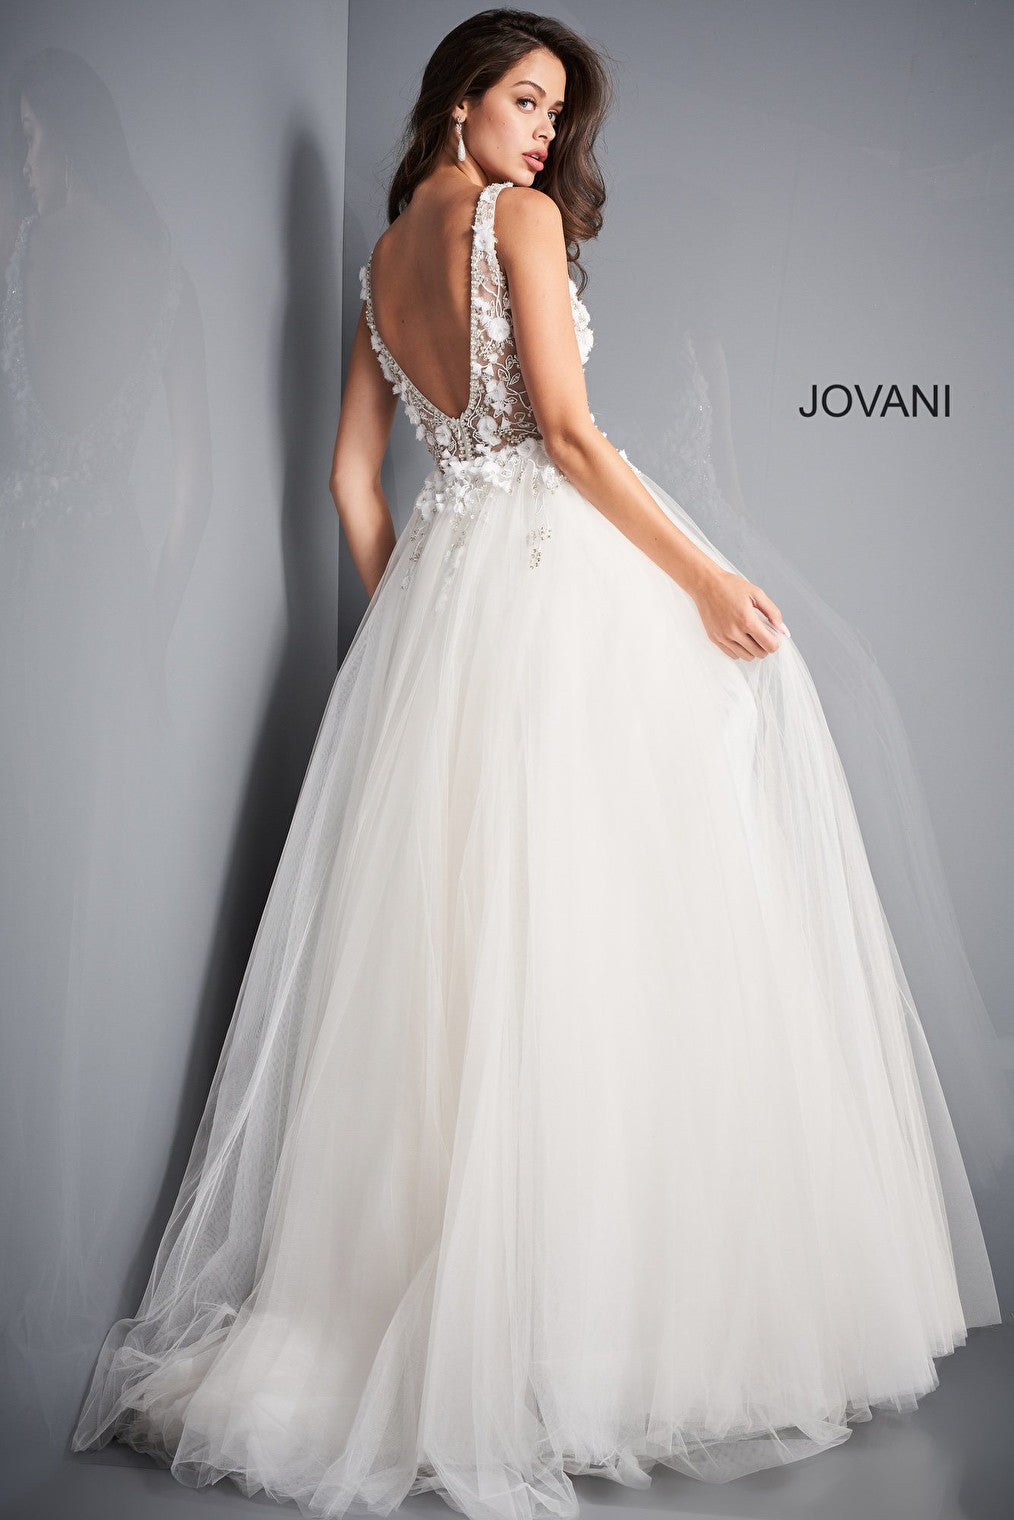 Ivory Jovani bridal gown 3110